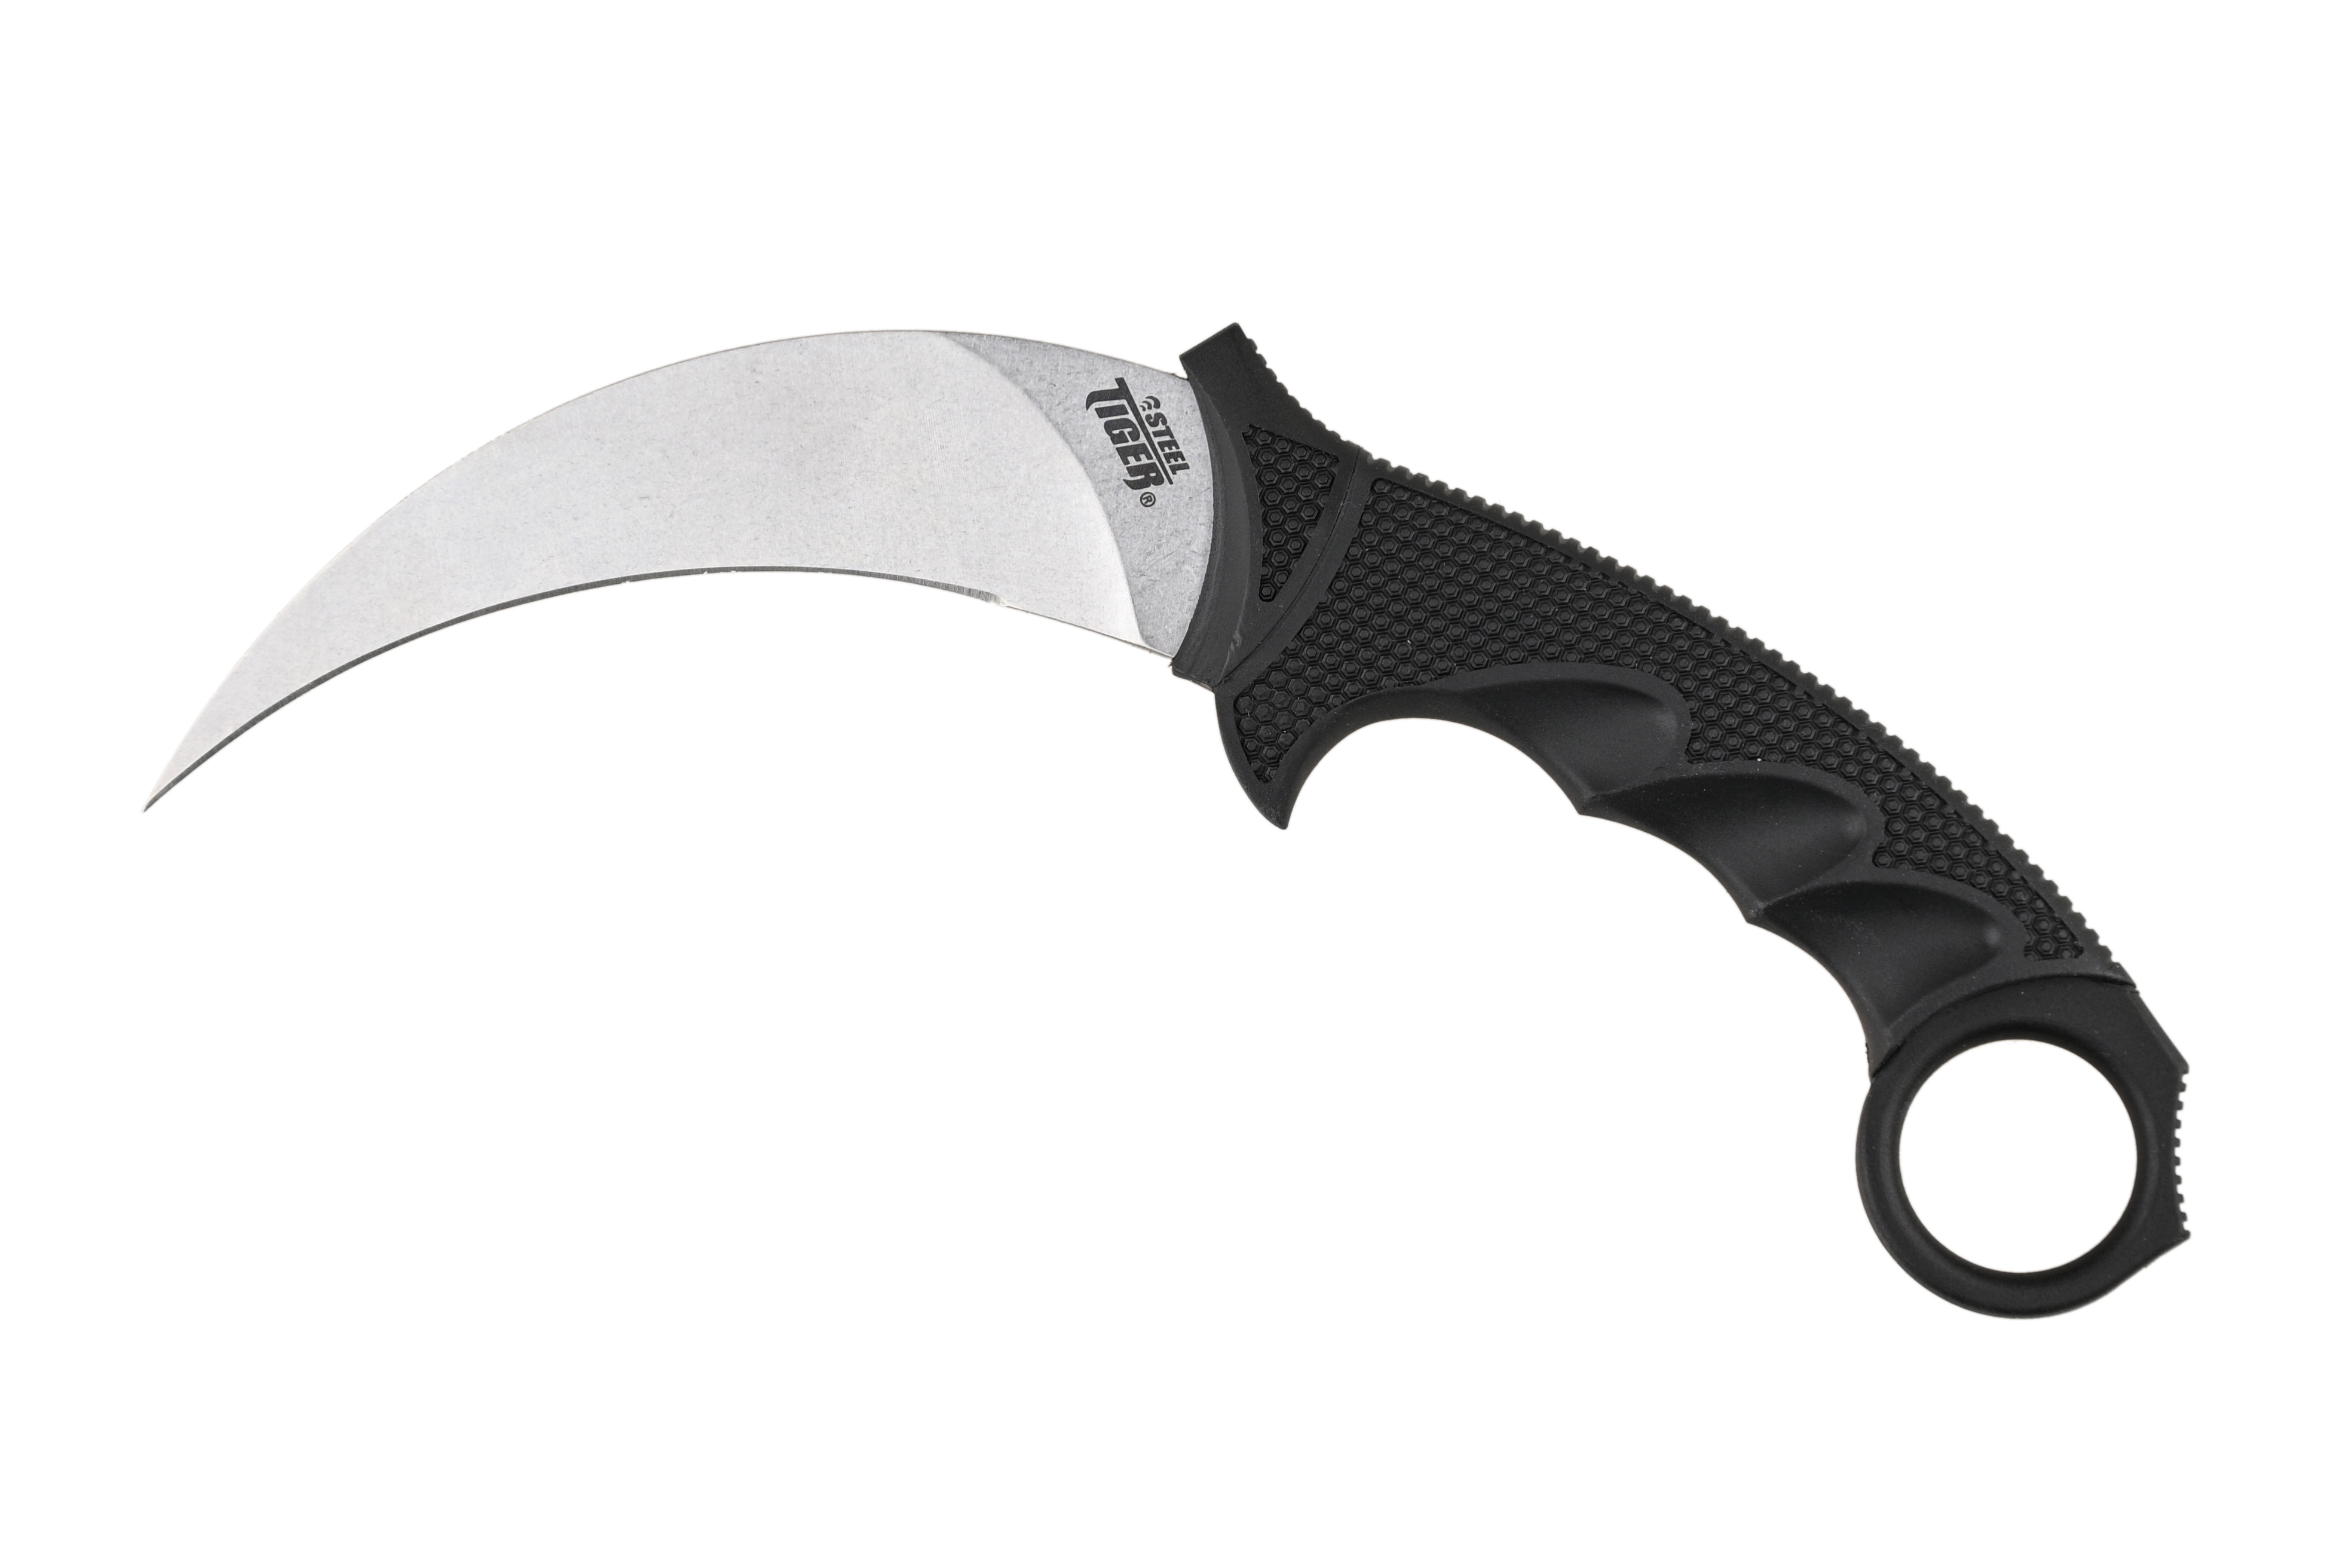 Нож Cold Steel Tiger фикс. клинок сталь AUS8 рукоять пластик - фото 1